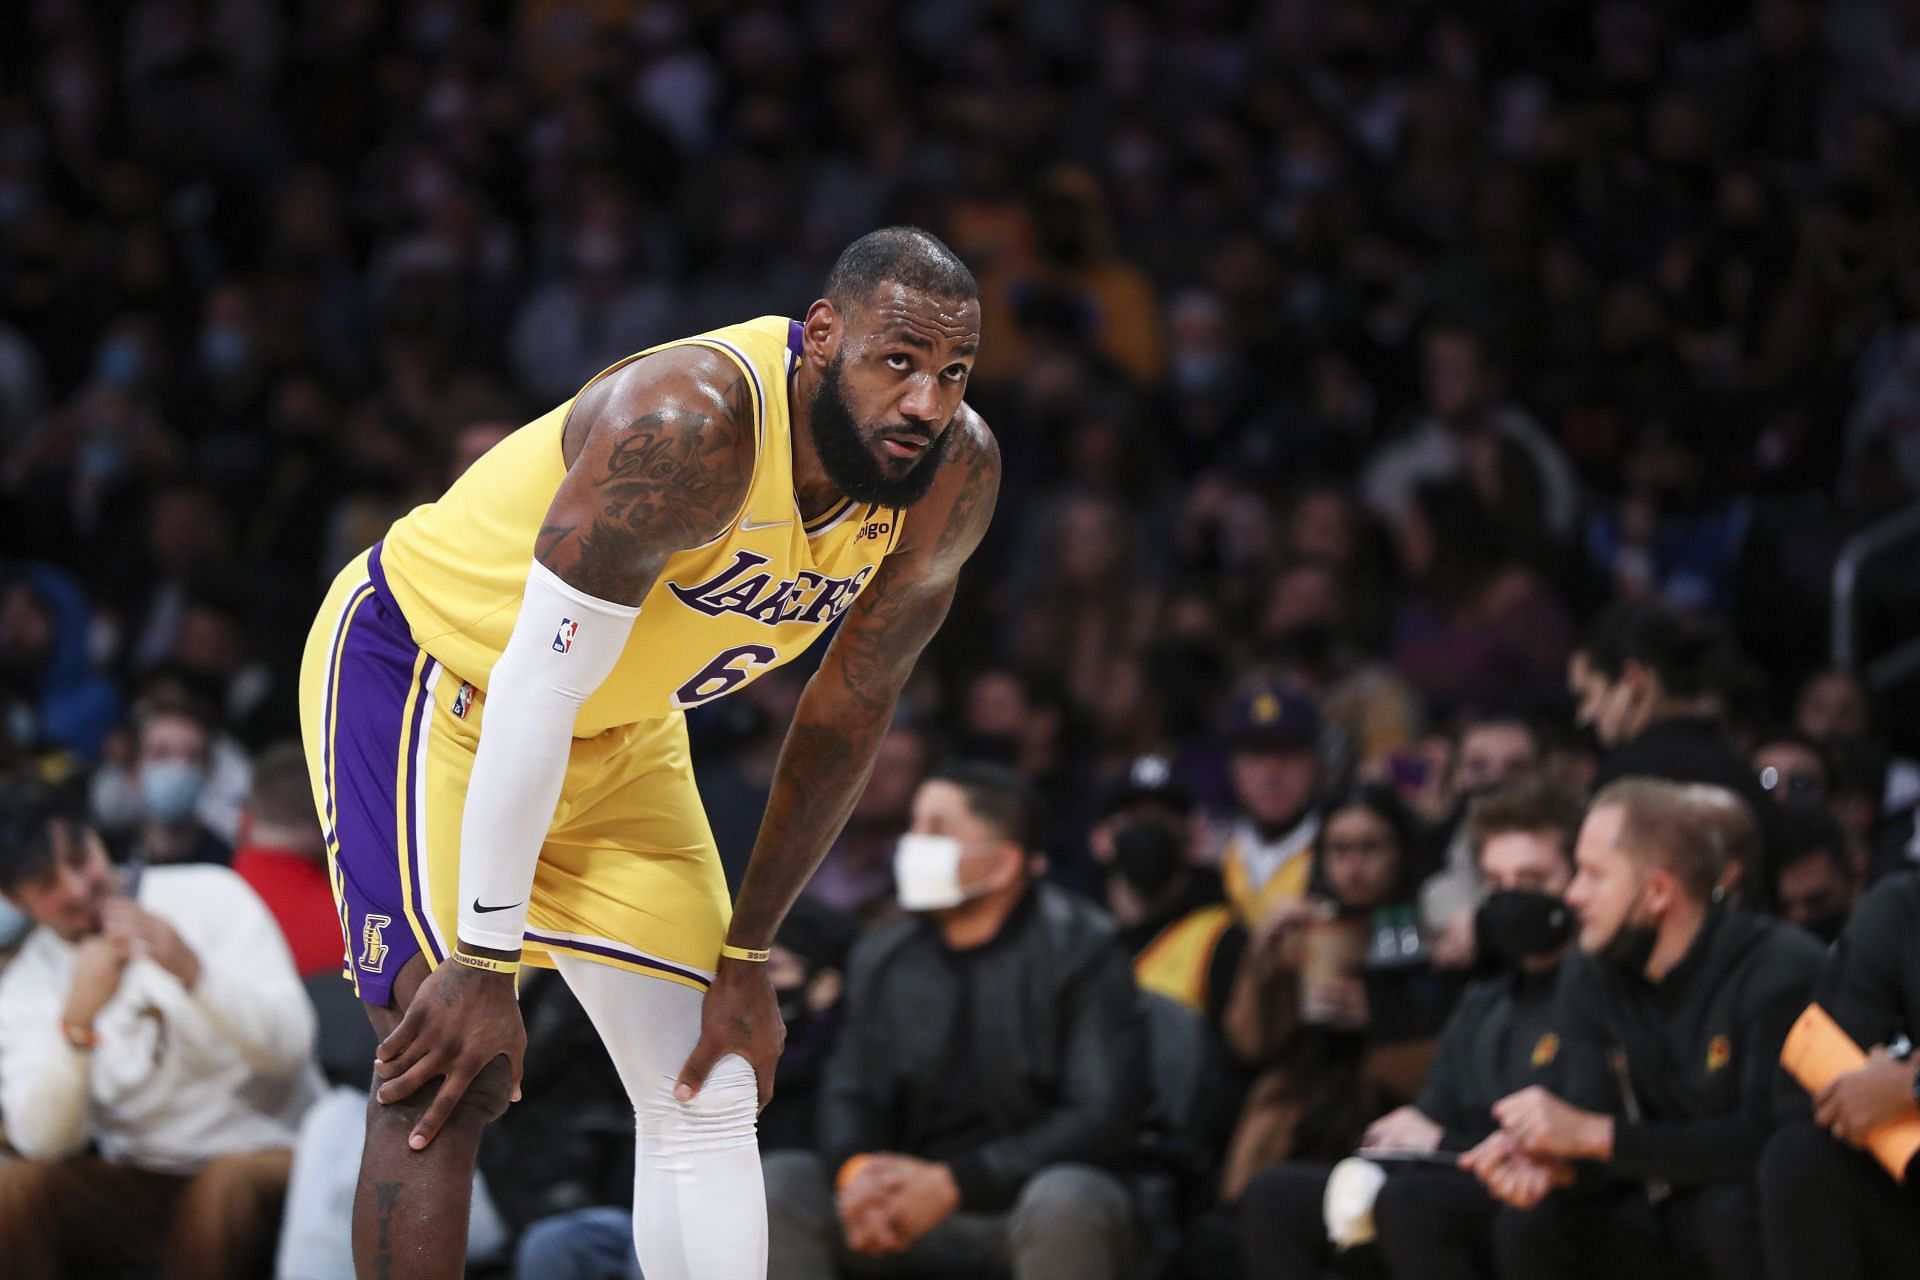 LA Lakers superstar forward LeBron James is having an impressive individual year